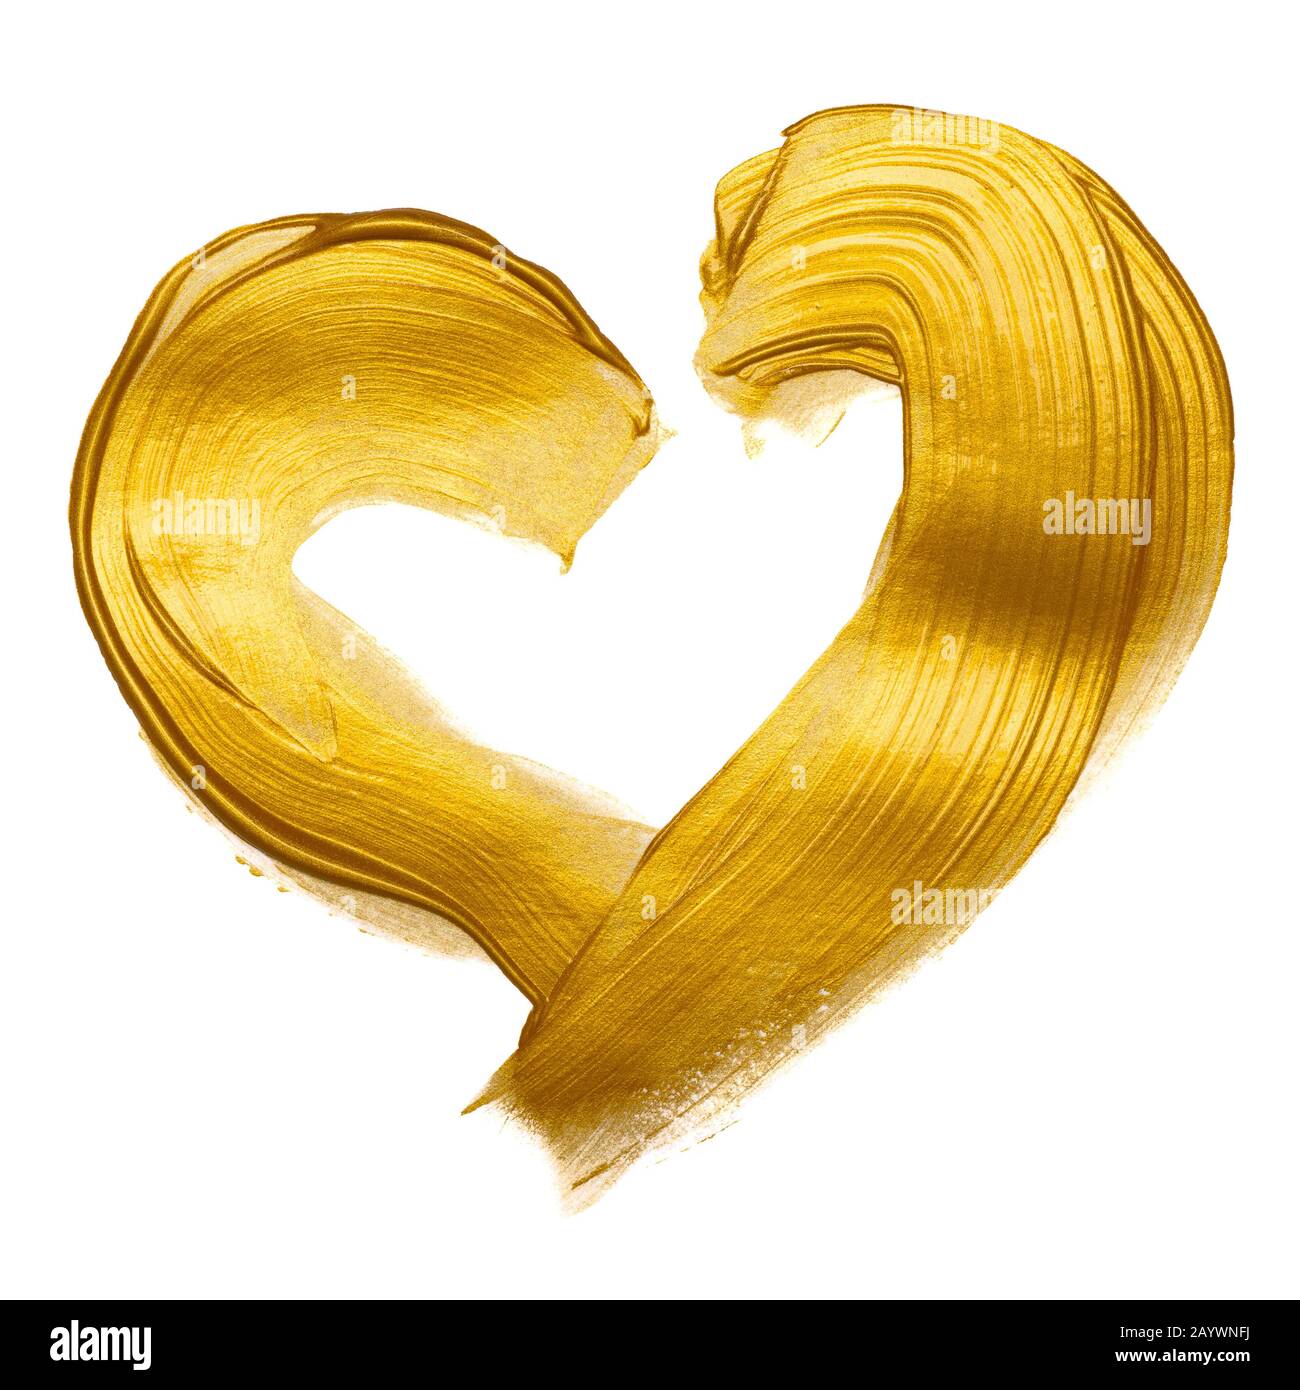 Gold paint heart hand brush stroke design element isolated on white background. Stock Photo